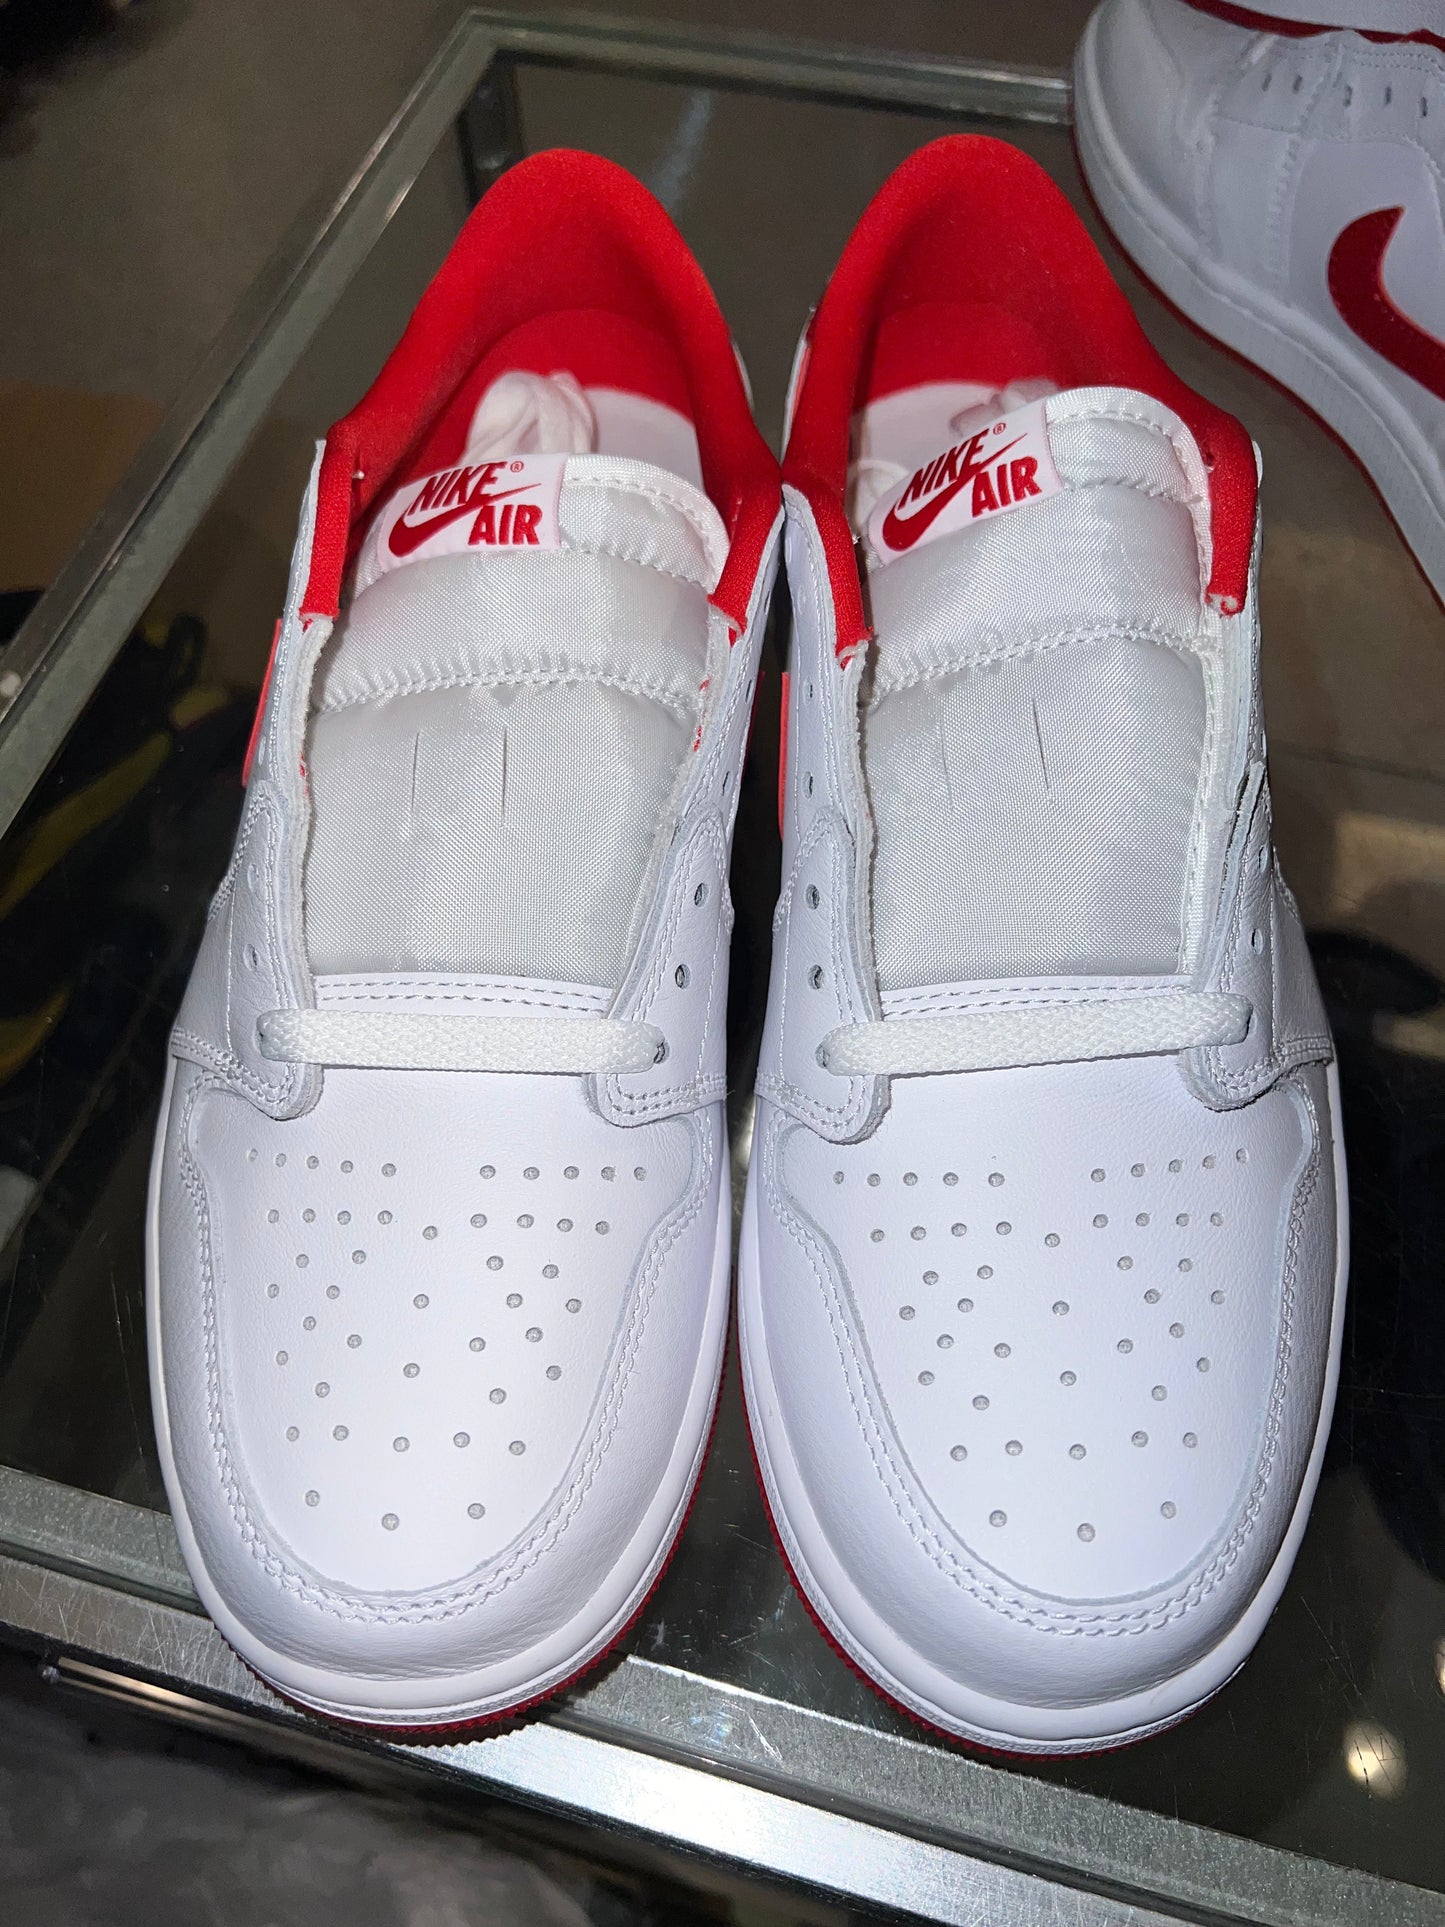 Size 9 Air Jordan 1 Low “University Red” Brand New (Mall)